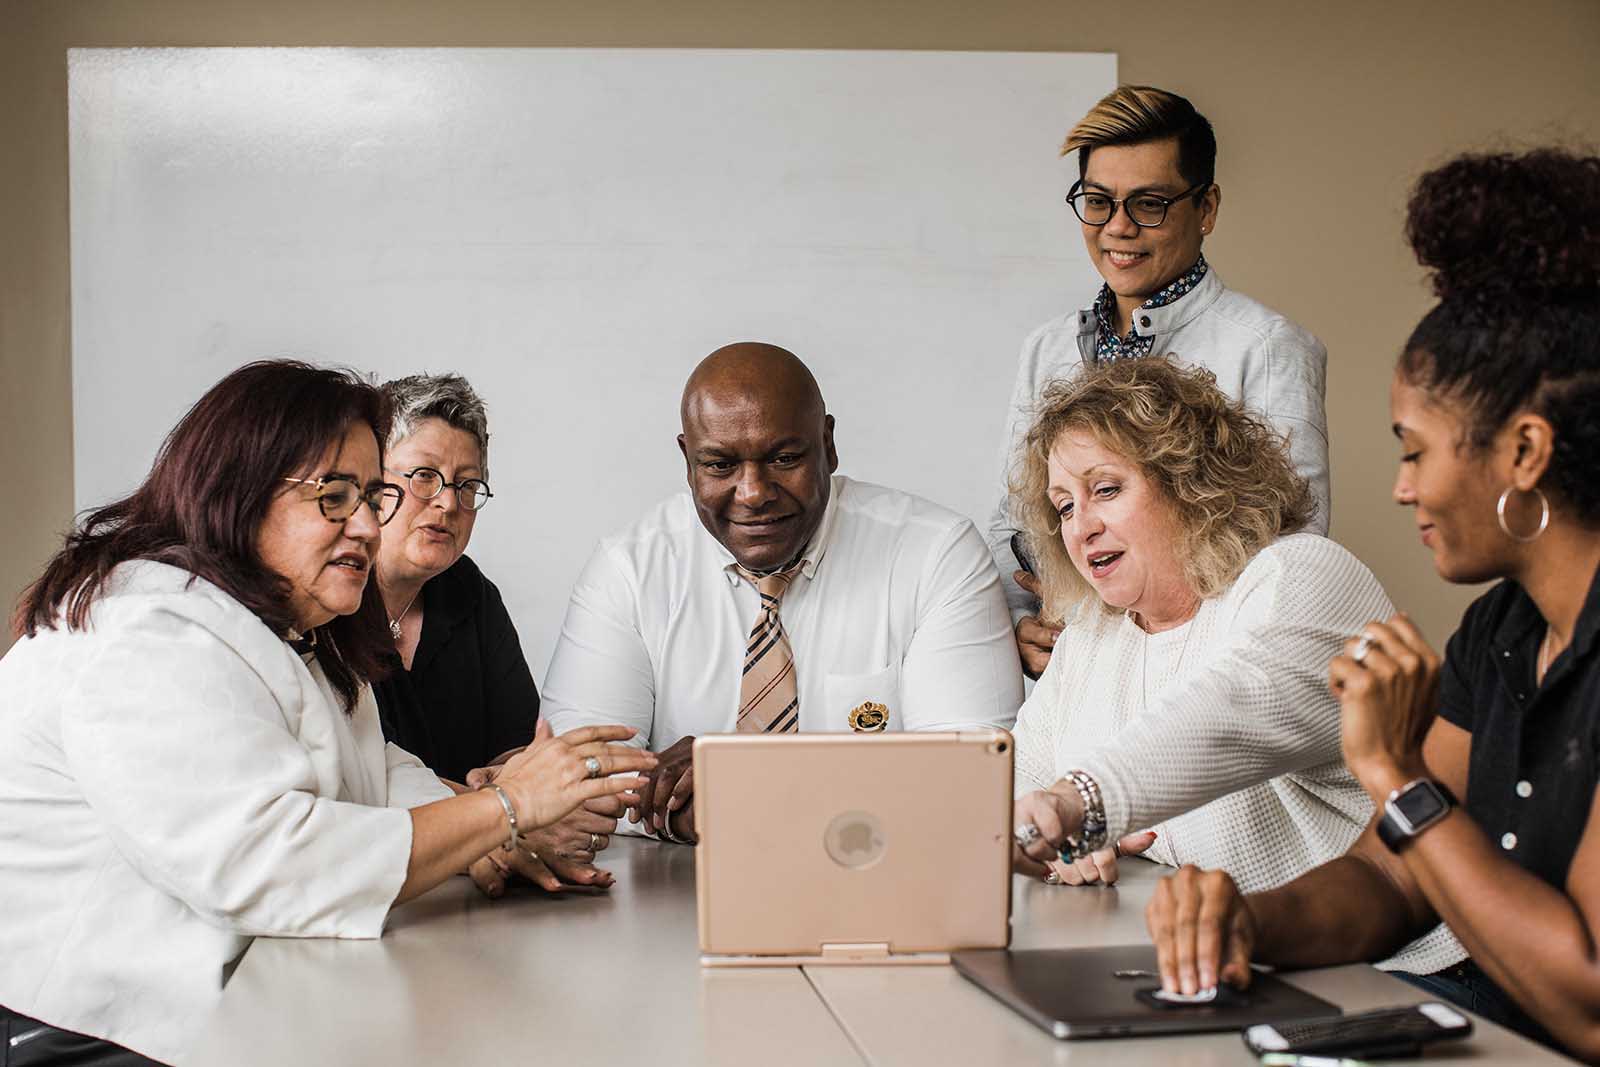 Spalding professors working around a laptop